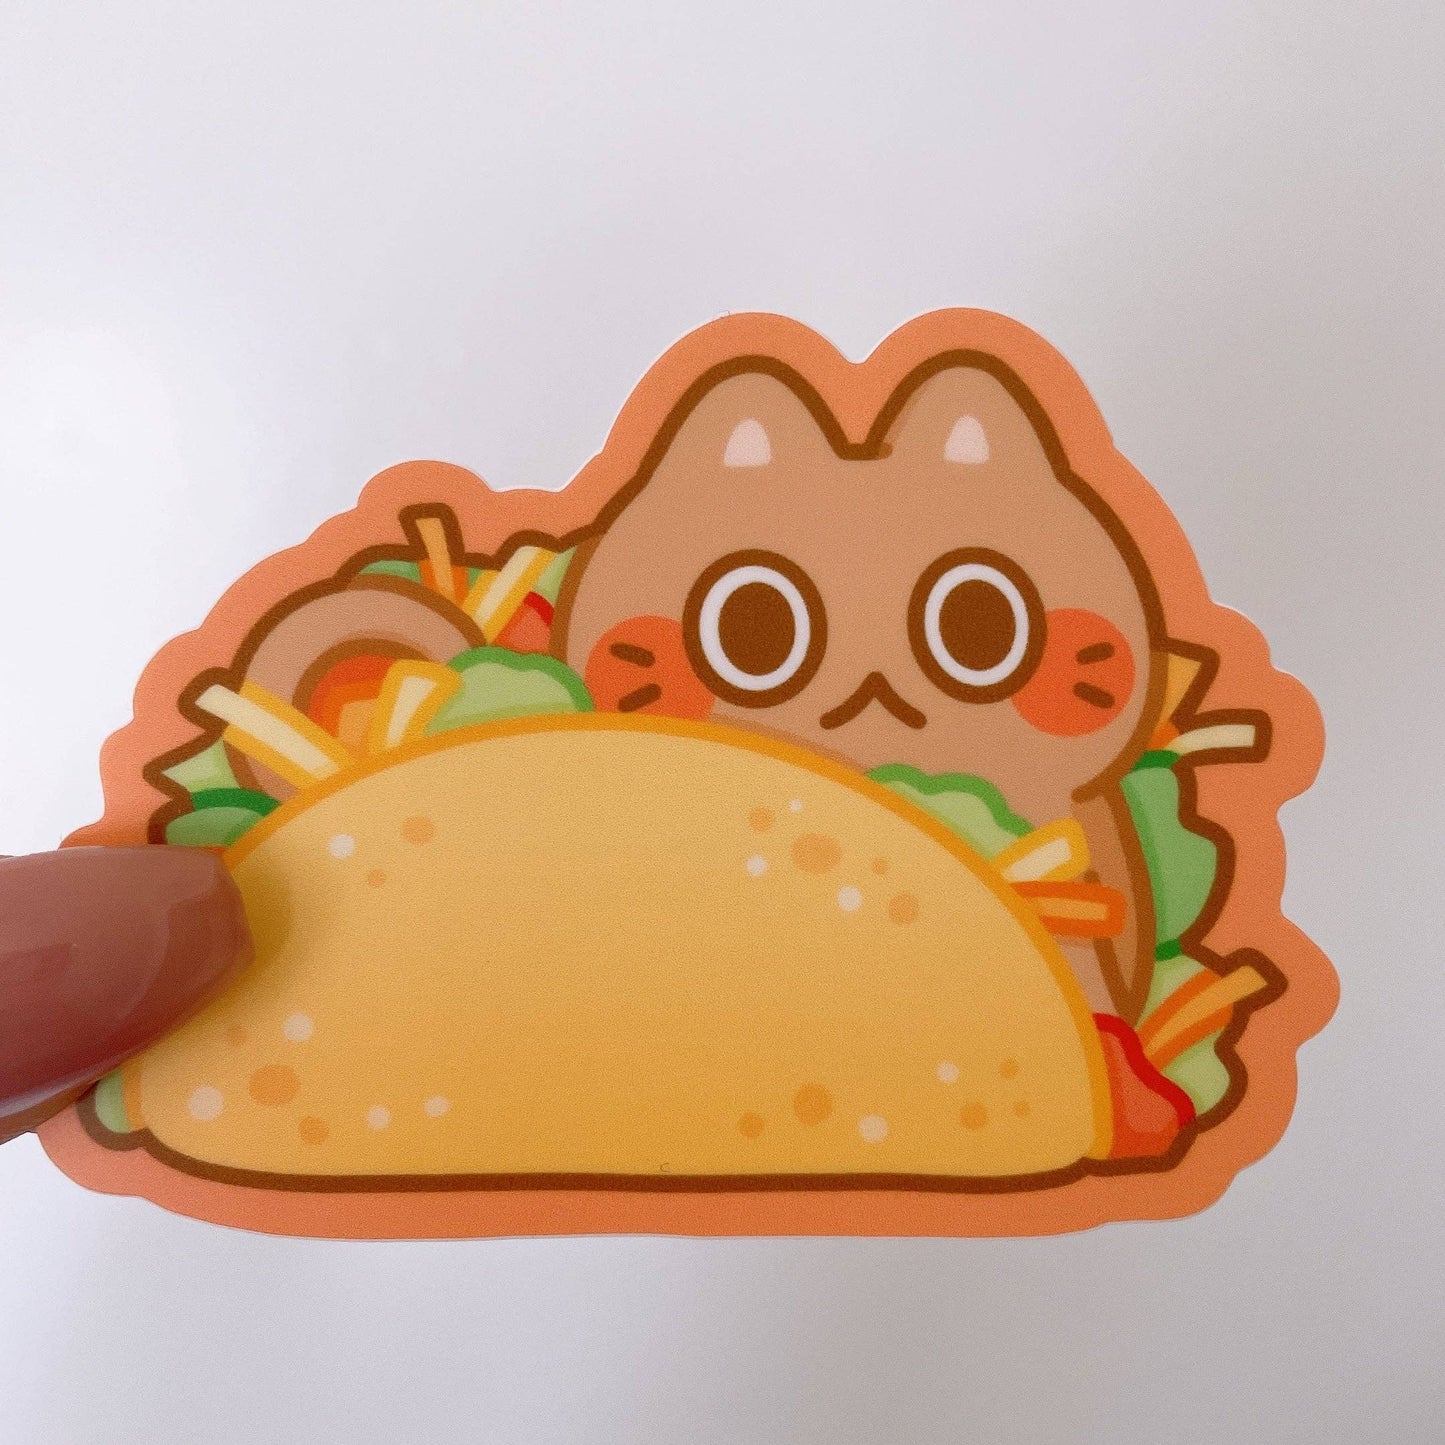 Taco Cat Sticker